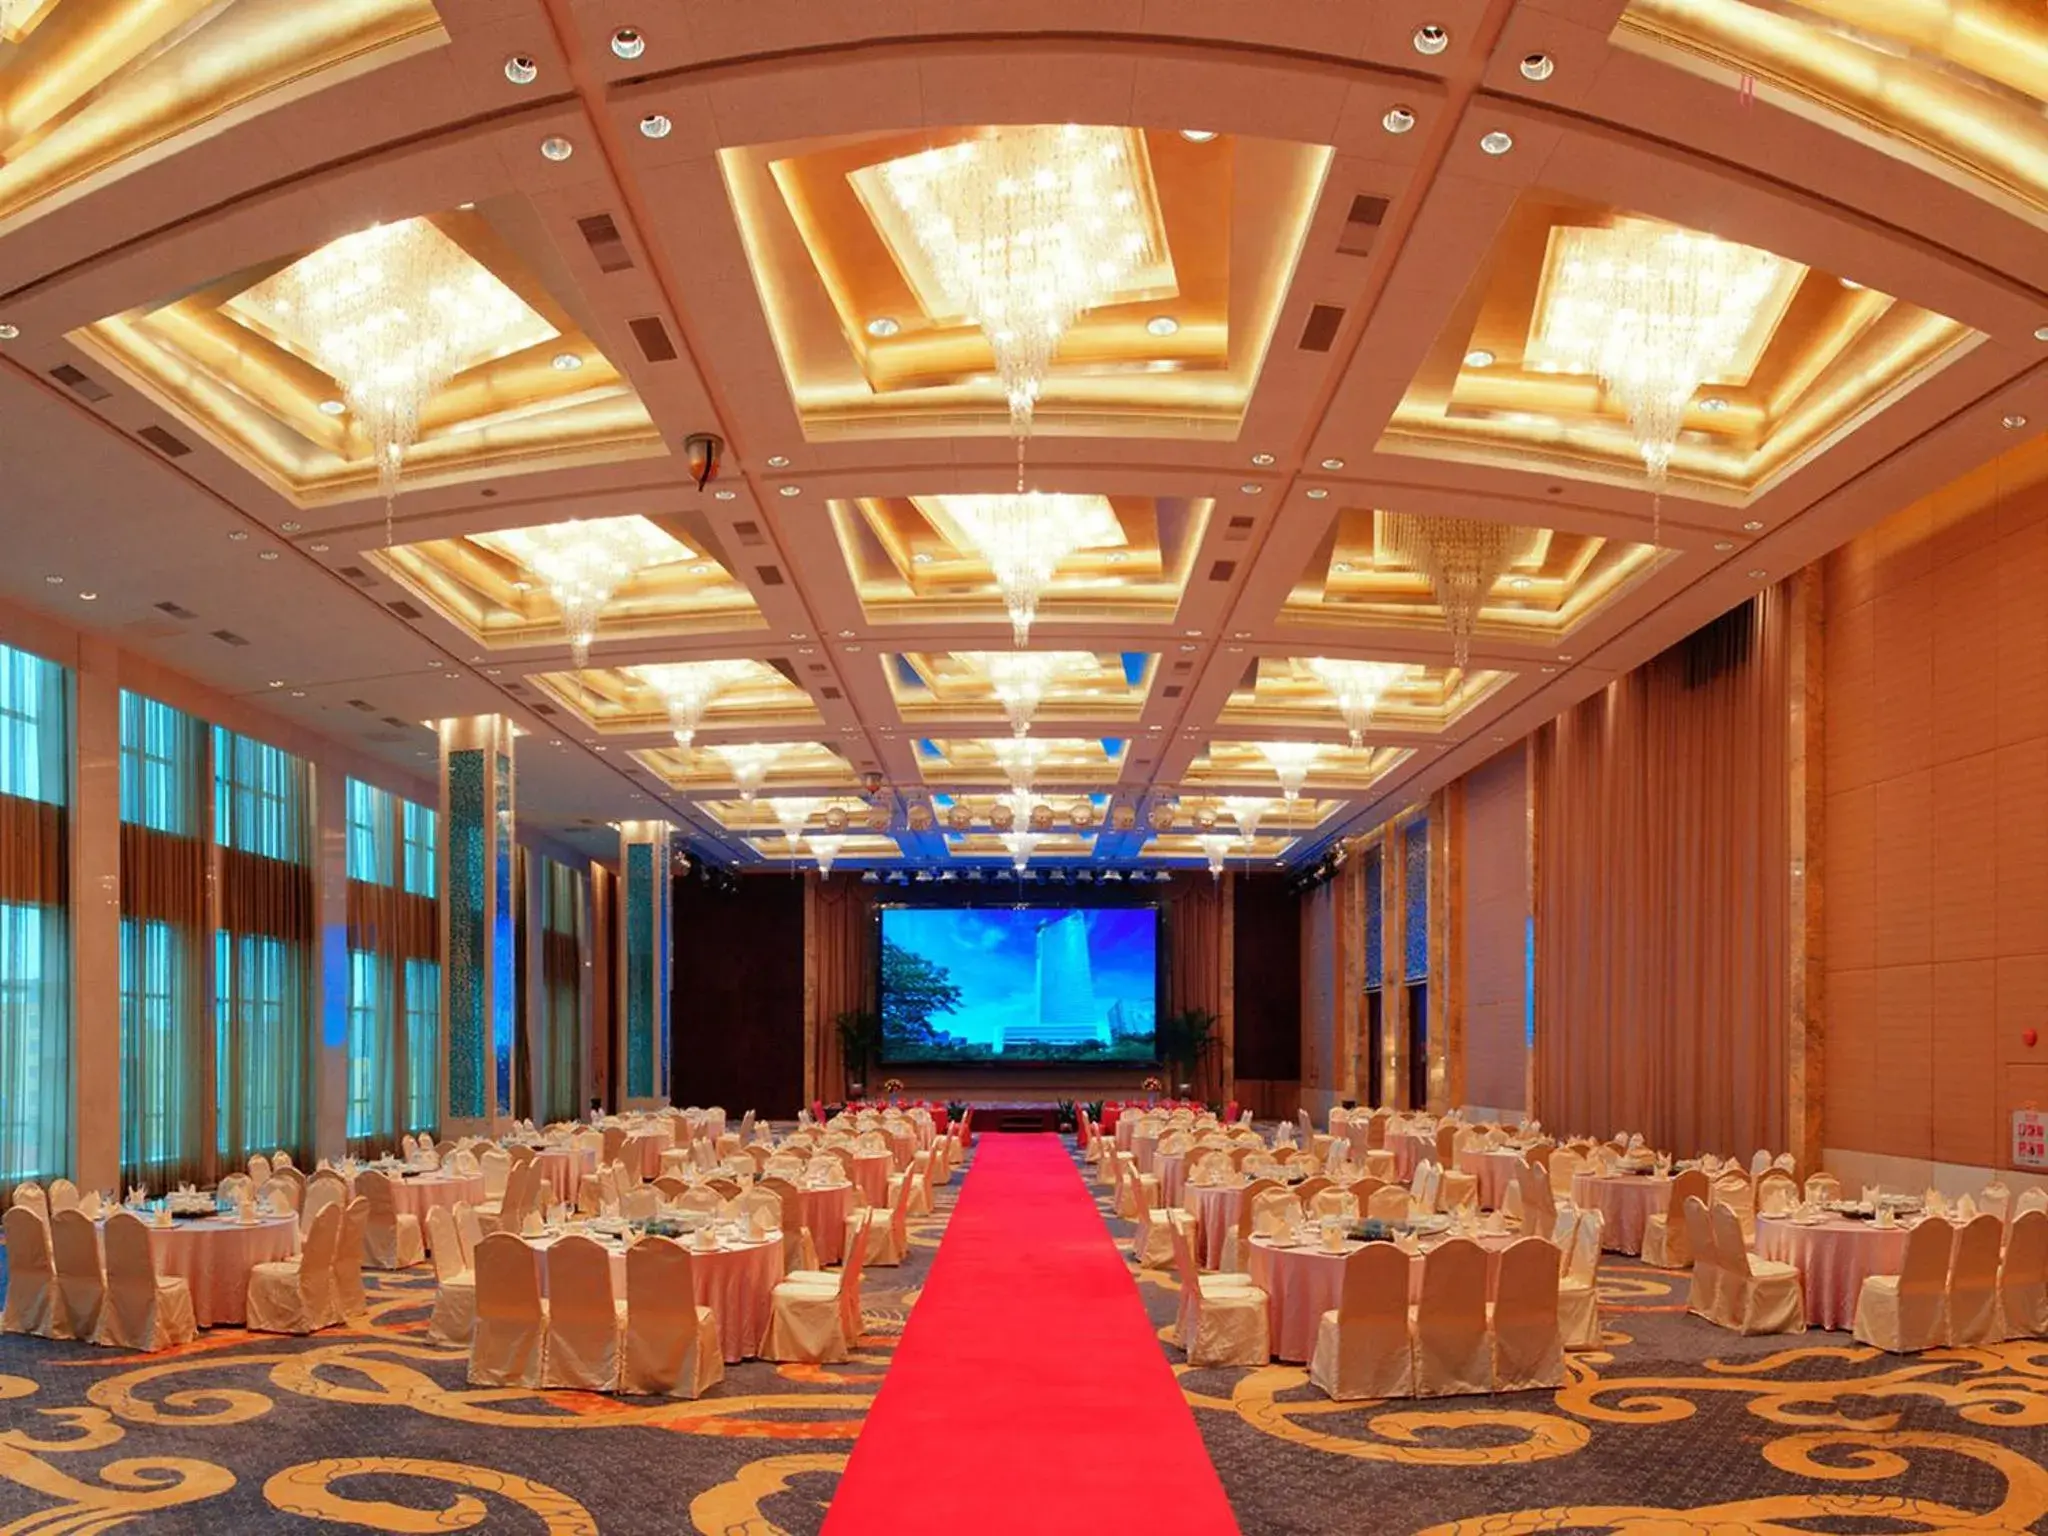 Banquet/Function facilities, Banquet Facilities in HJ International Hotel